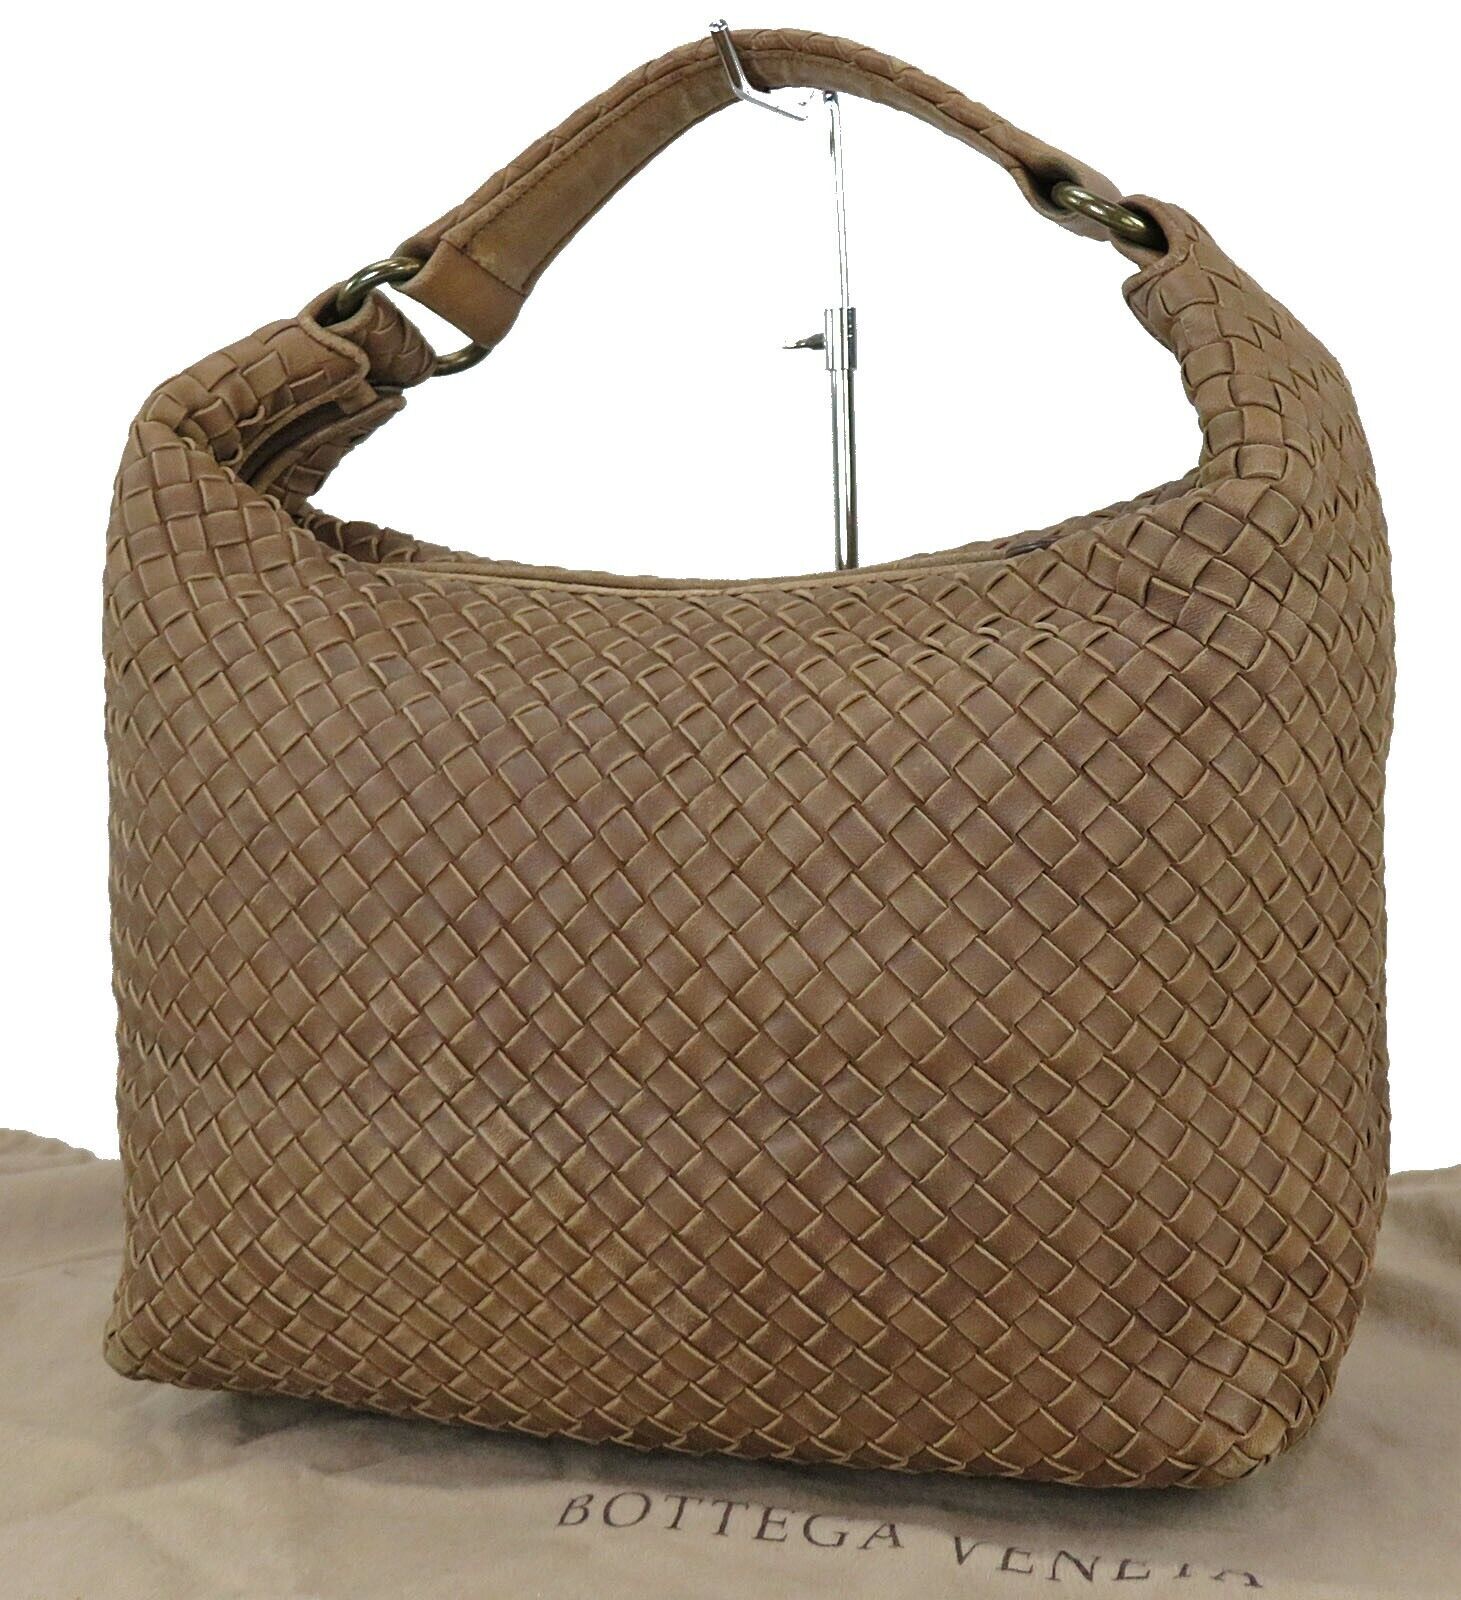 Authentic BOTTEGA VENETA Brown Woven Leather Shoulder Tote Bag Purse #43075